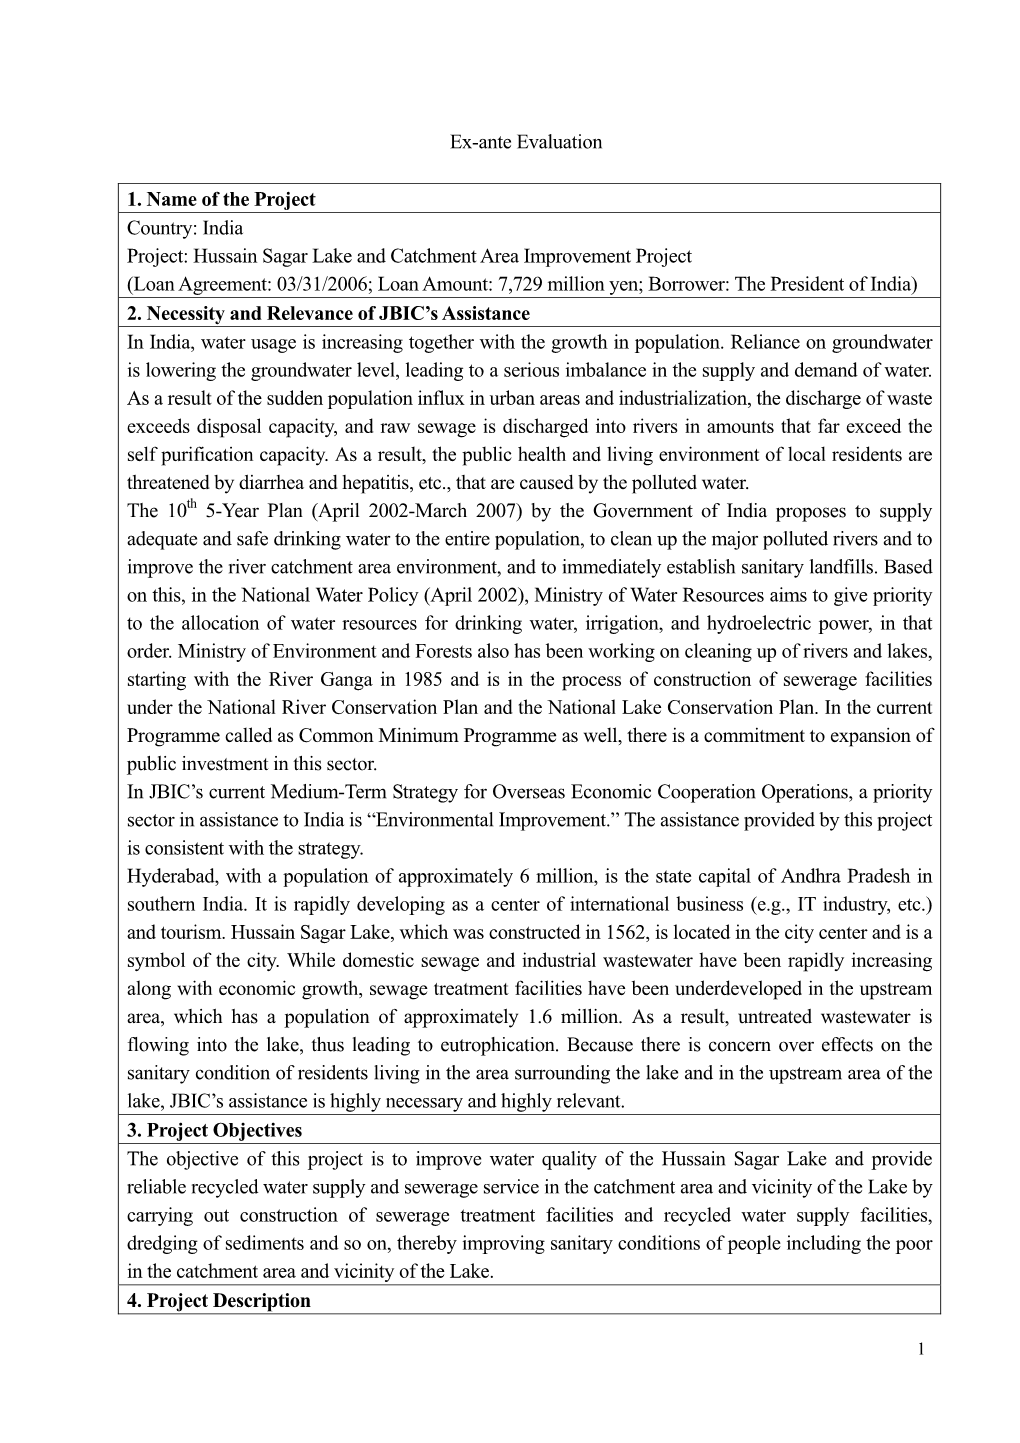 Hussain Sagar Lake and Catchment Area Improvement Project (Loan Agreement: 03/31/2006; Loan Amount: 7,729 Million Yen; Borrower: the President of India) 2